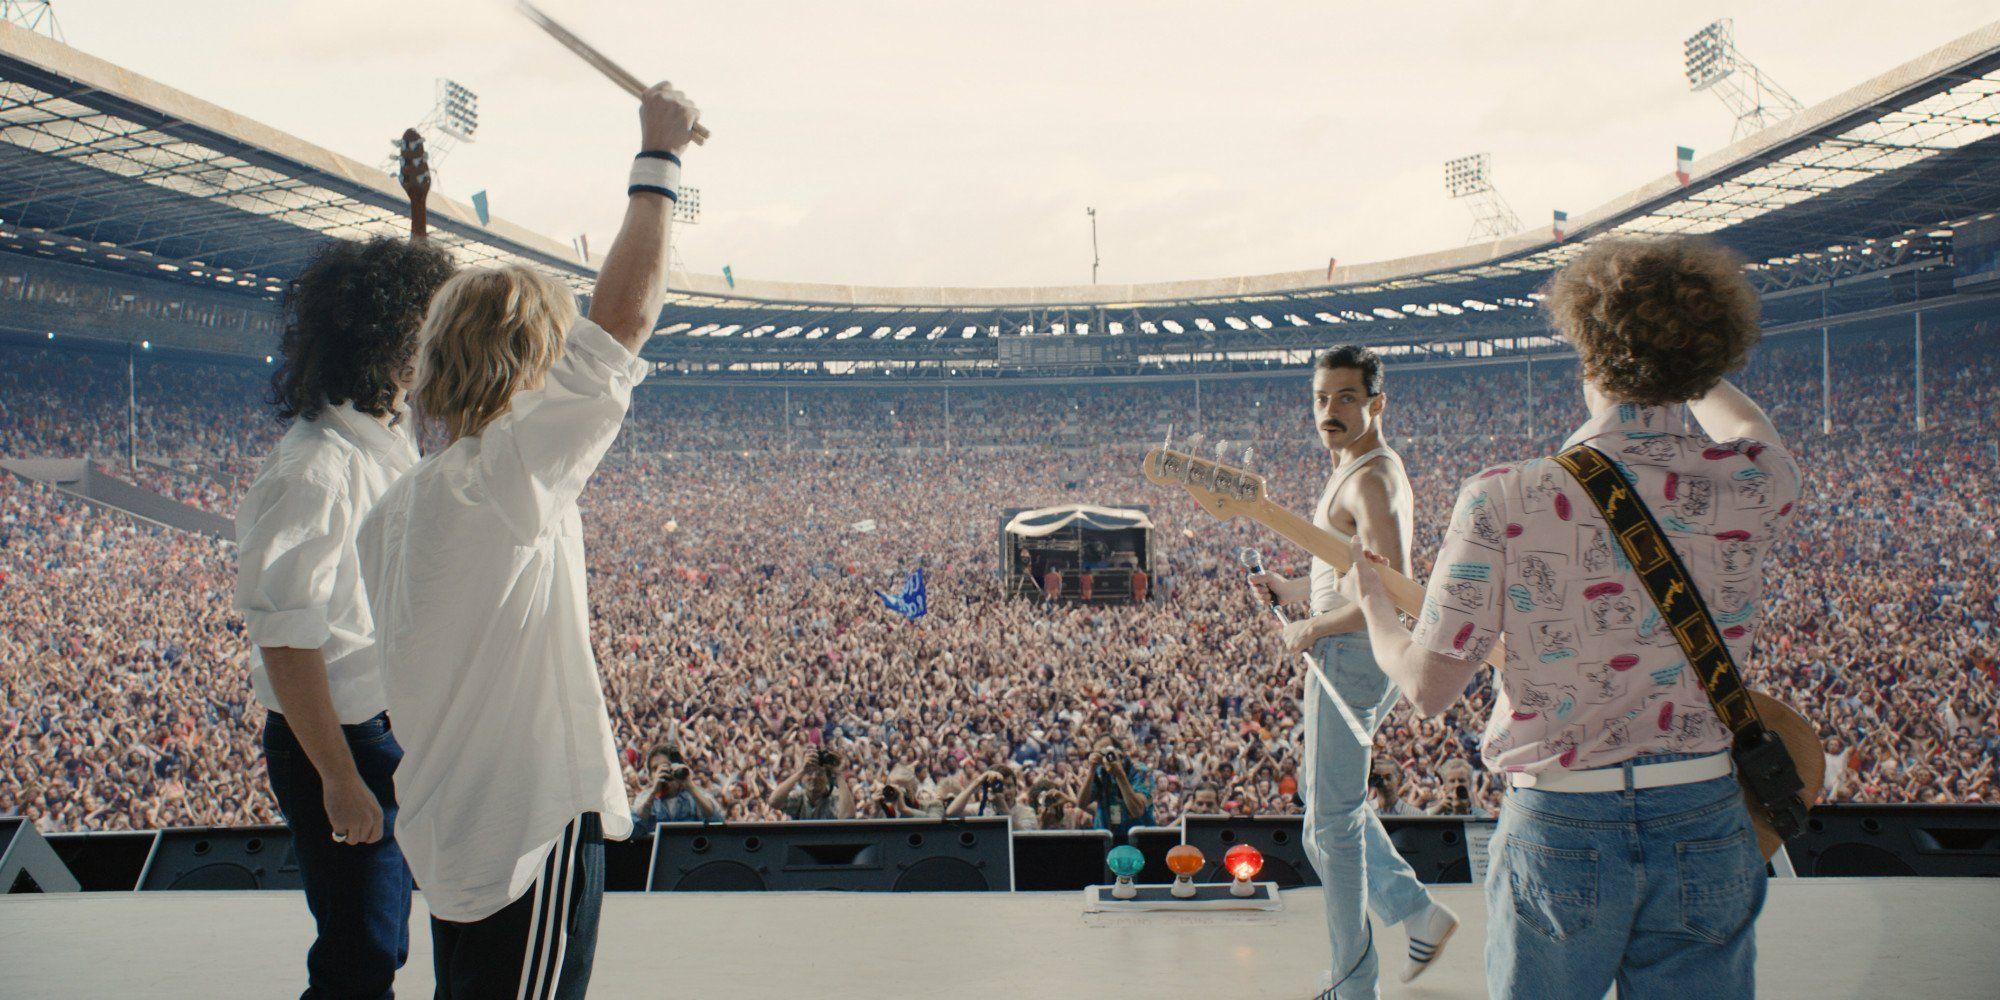 2000x1000 Bohemian Rhapsody Image Show Freddie Mercury, Queen